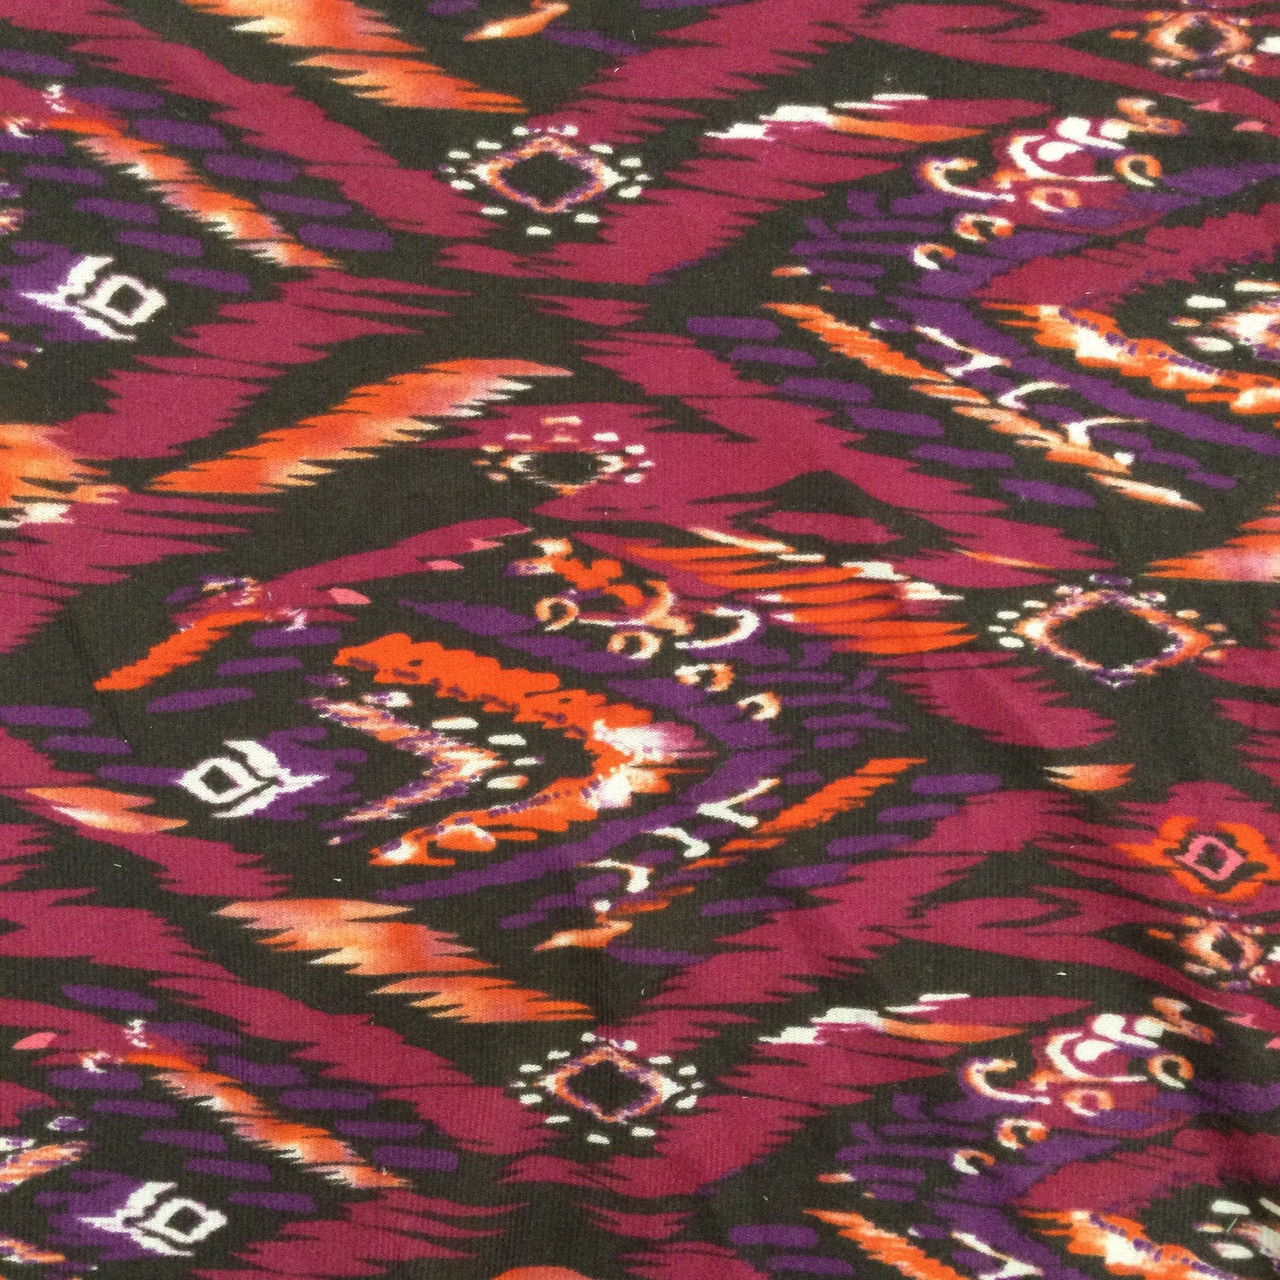 Fashion Fabrics Club Jamestown Toile Baby Pink by Premier Prints - Drapery Fabric 30 Yard Bolt (100% Cotton)